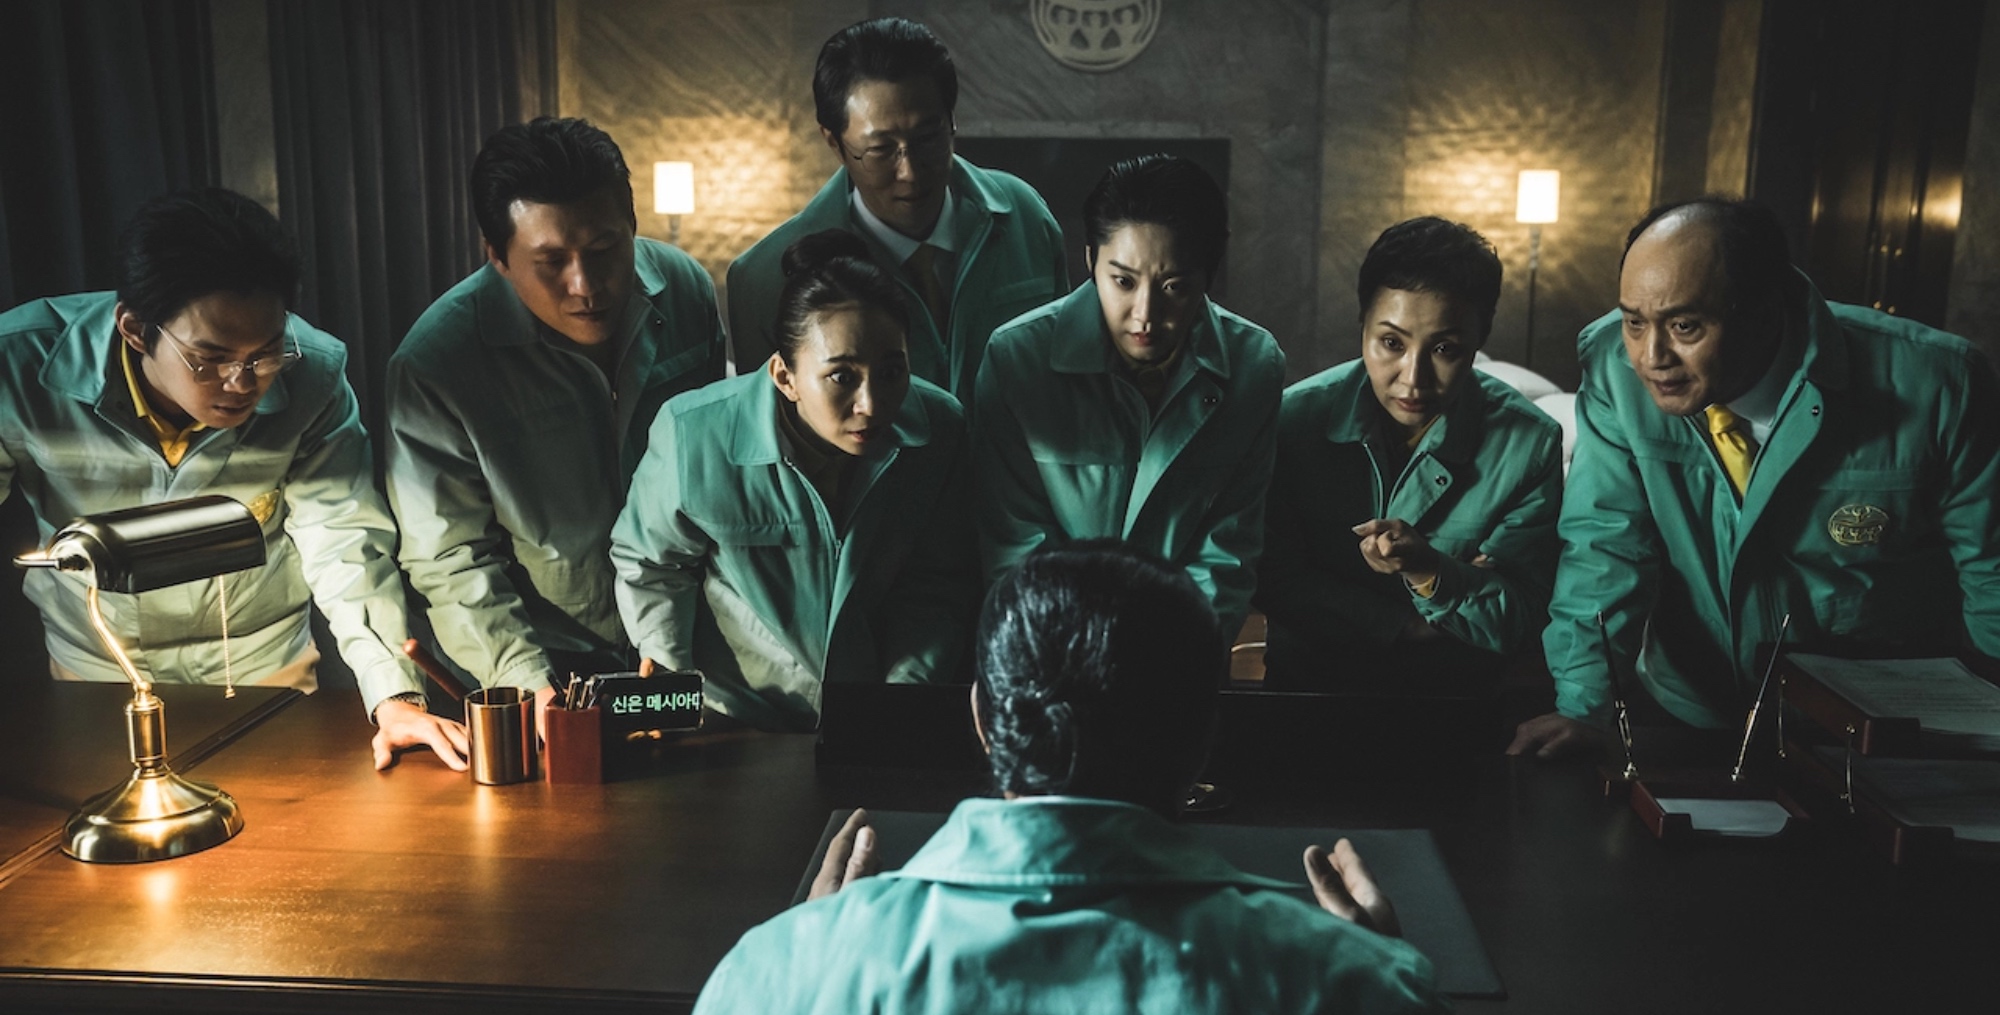 Kim Mi-soo in 'Hellbound' episode 6 wearing green jacket leaning over desk.